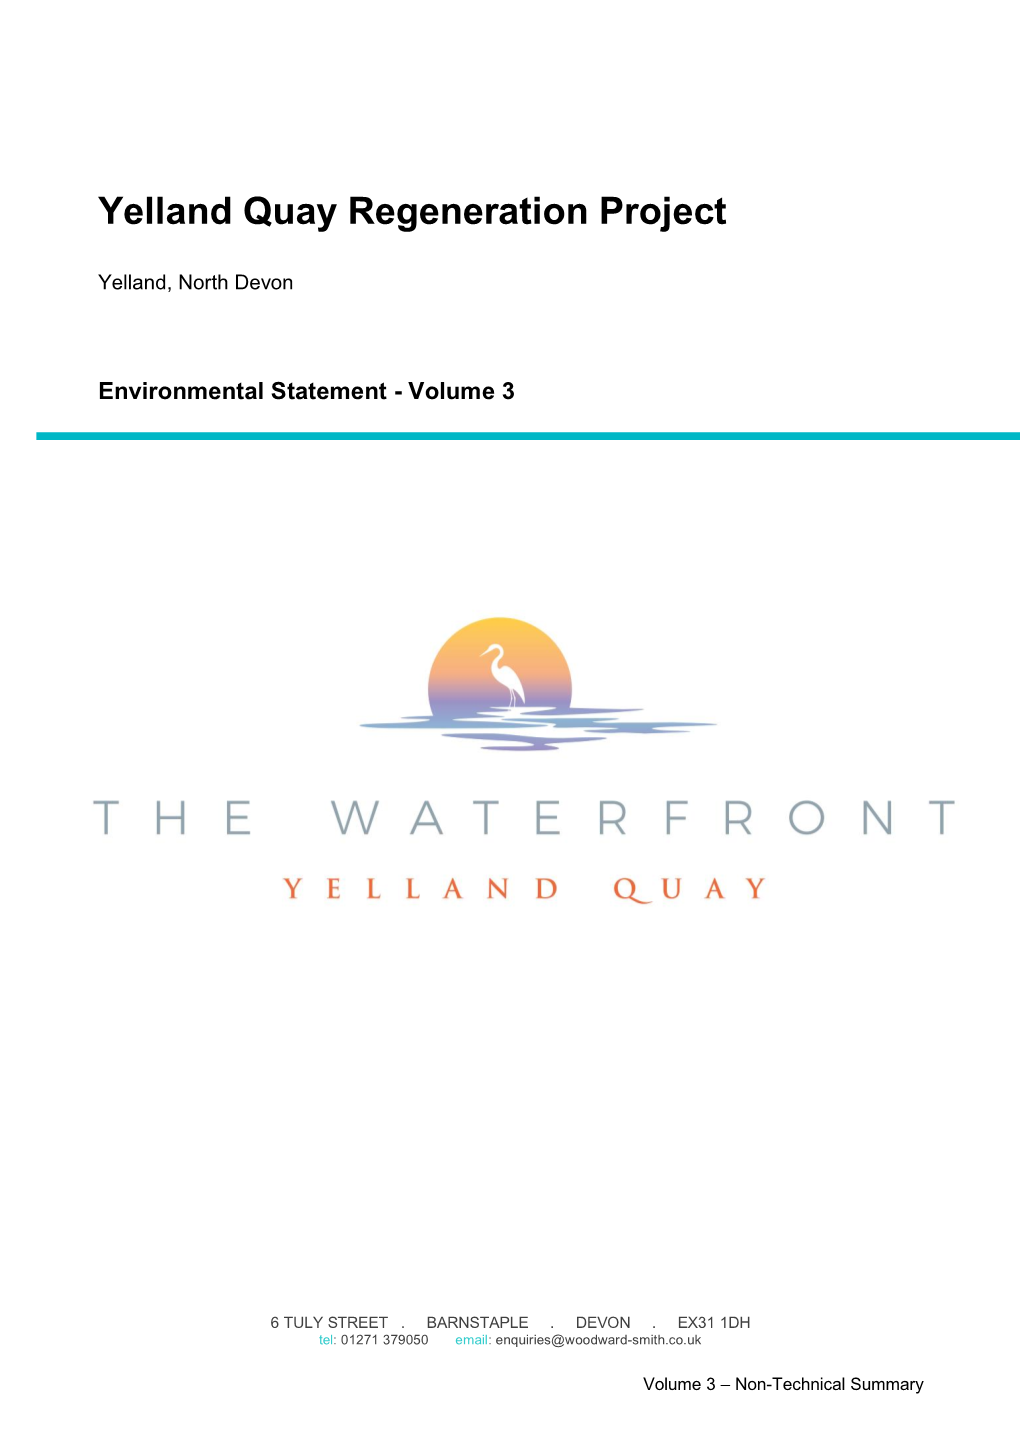 Yelland Quay Regeneration Project Environmental Statement